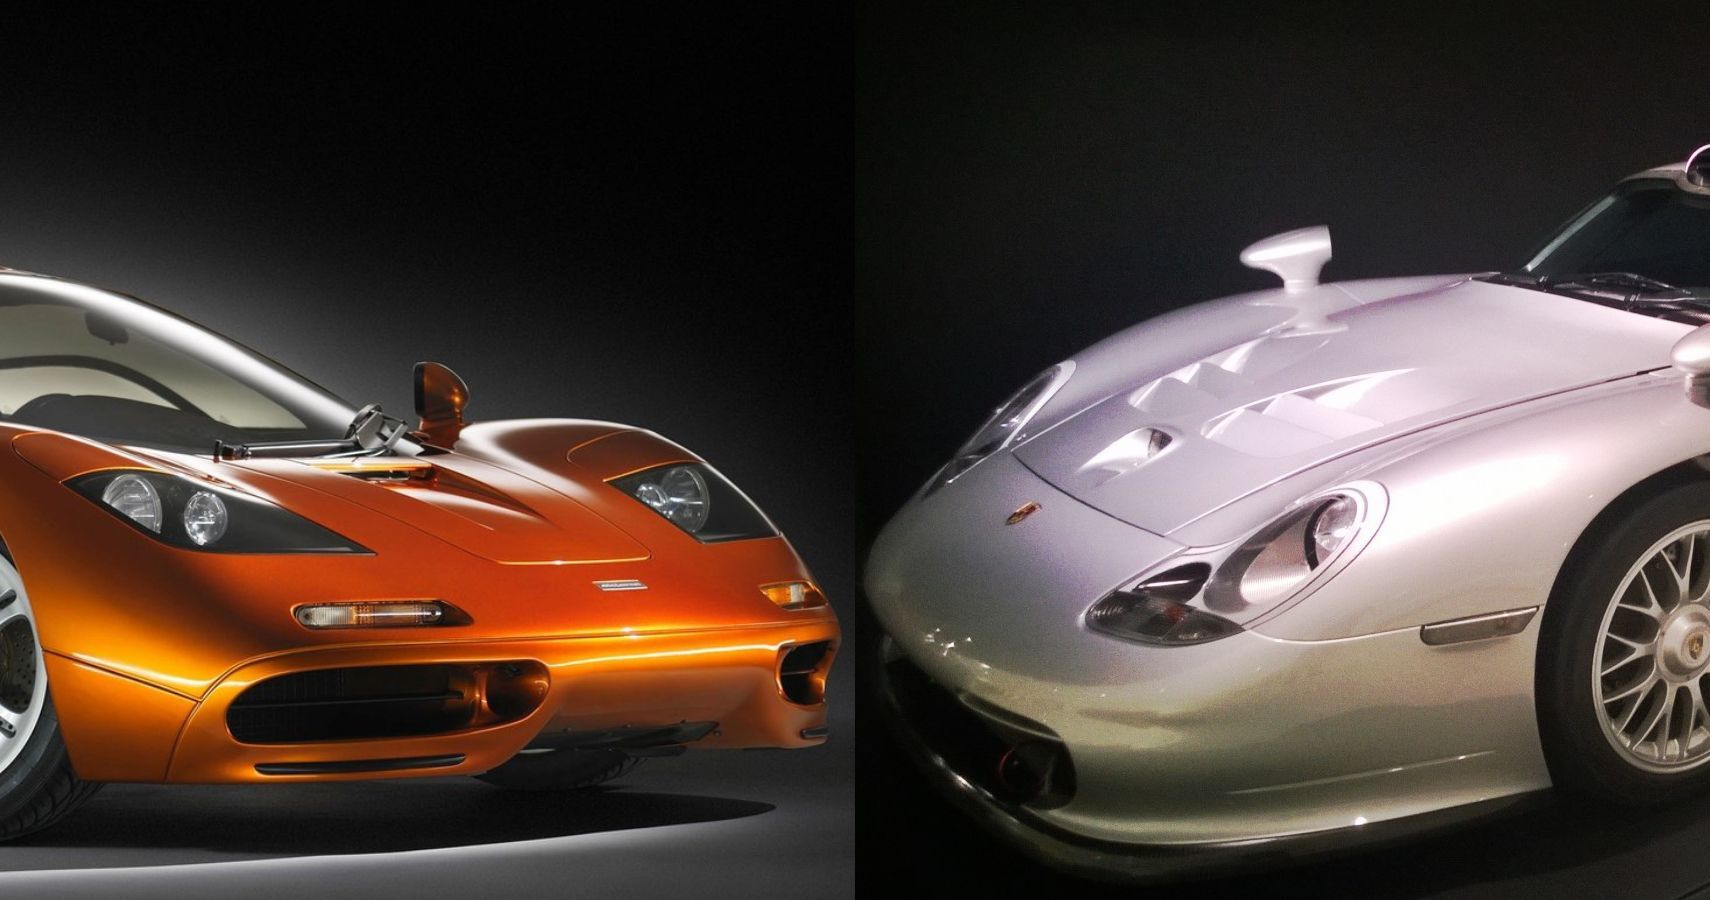 McLaren F1 and Porsche 911 GT1 Strassenversion side-by-side front fascia view